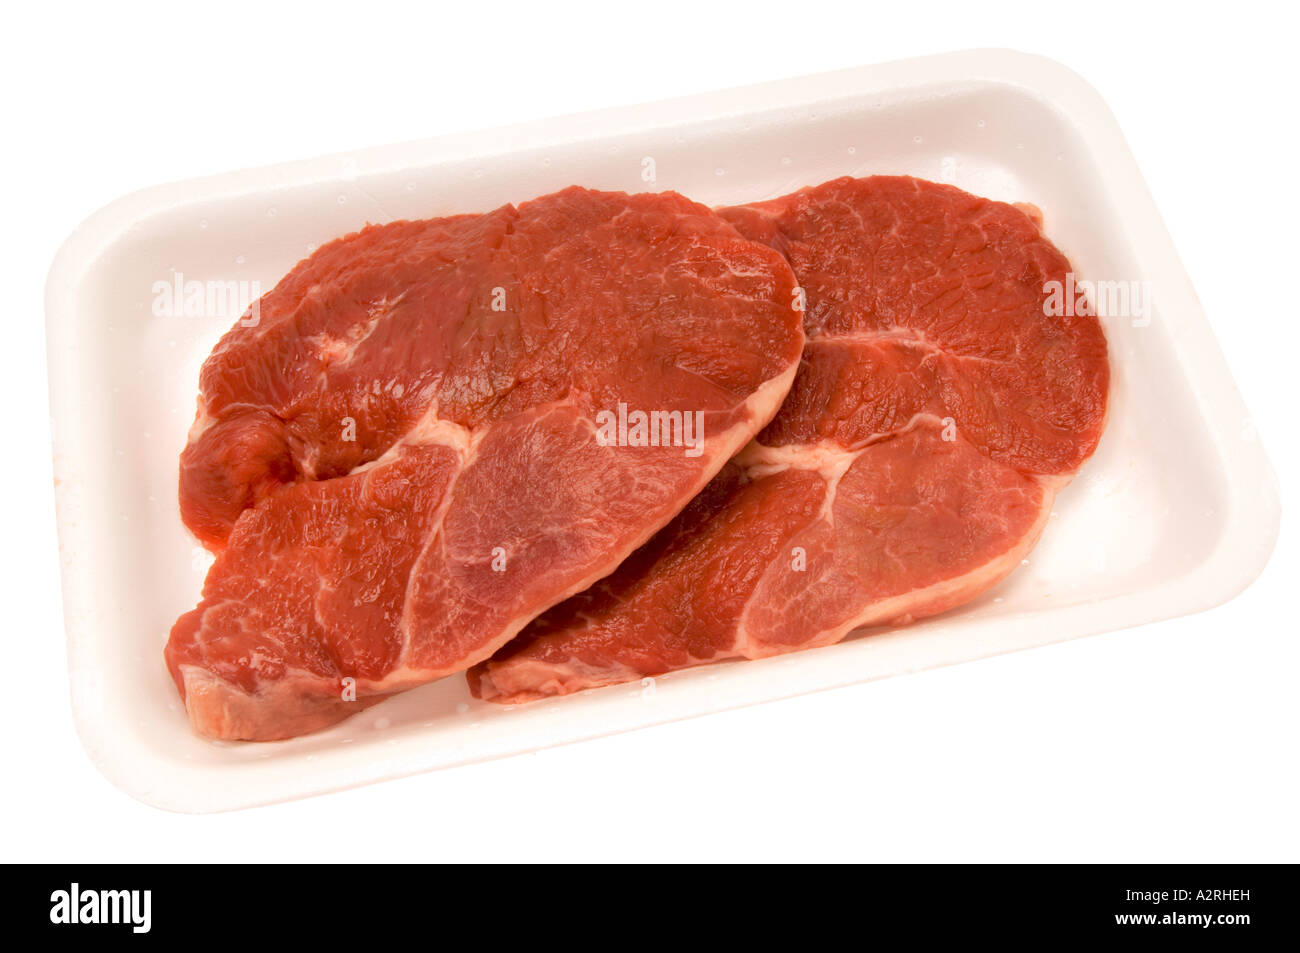 lambs sheep meat fillet filet steak piece of sirloin tenderloin Stock Photo